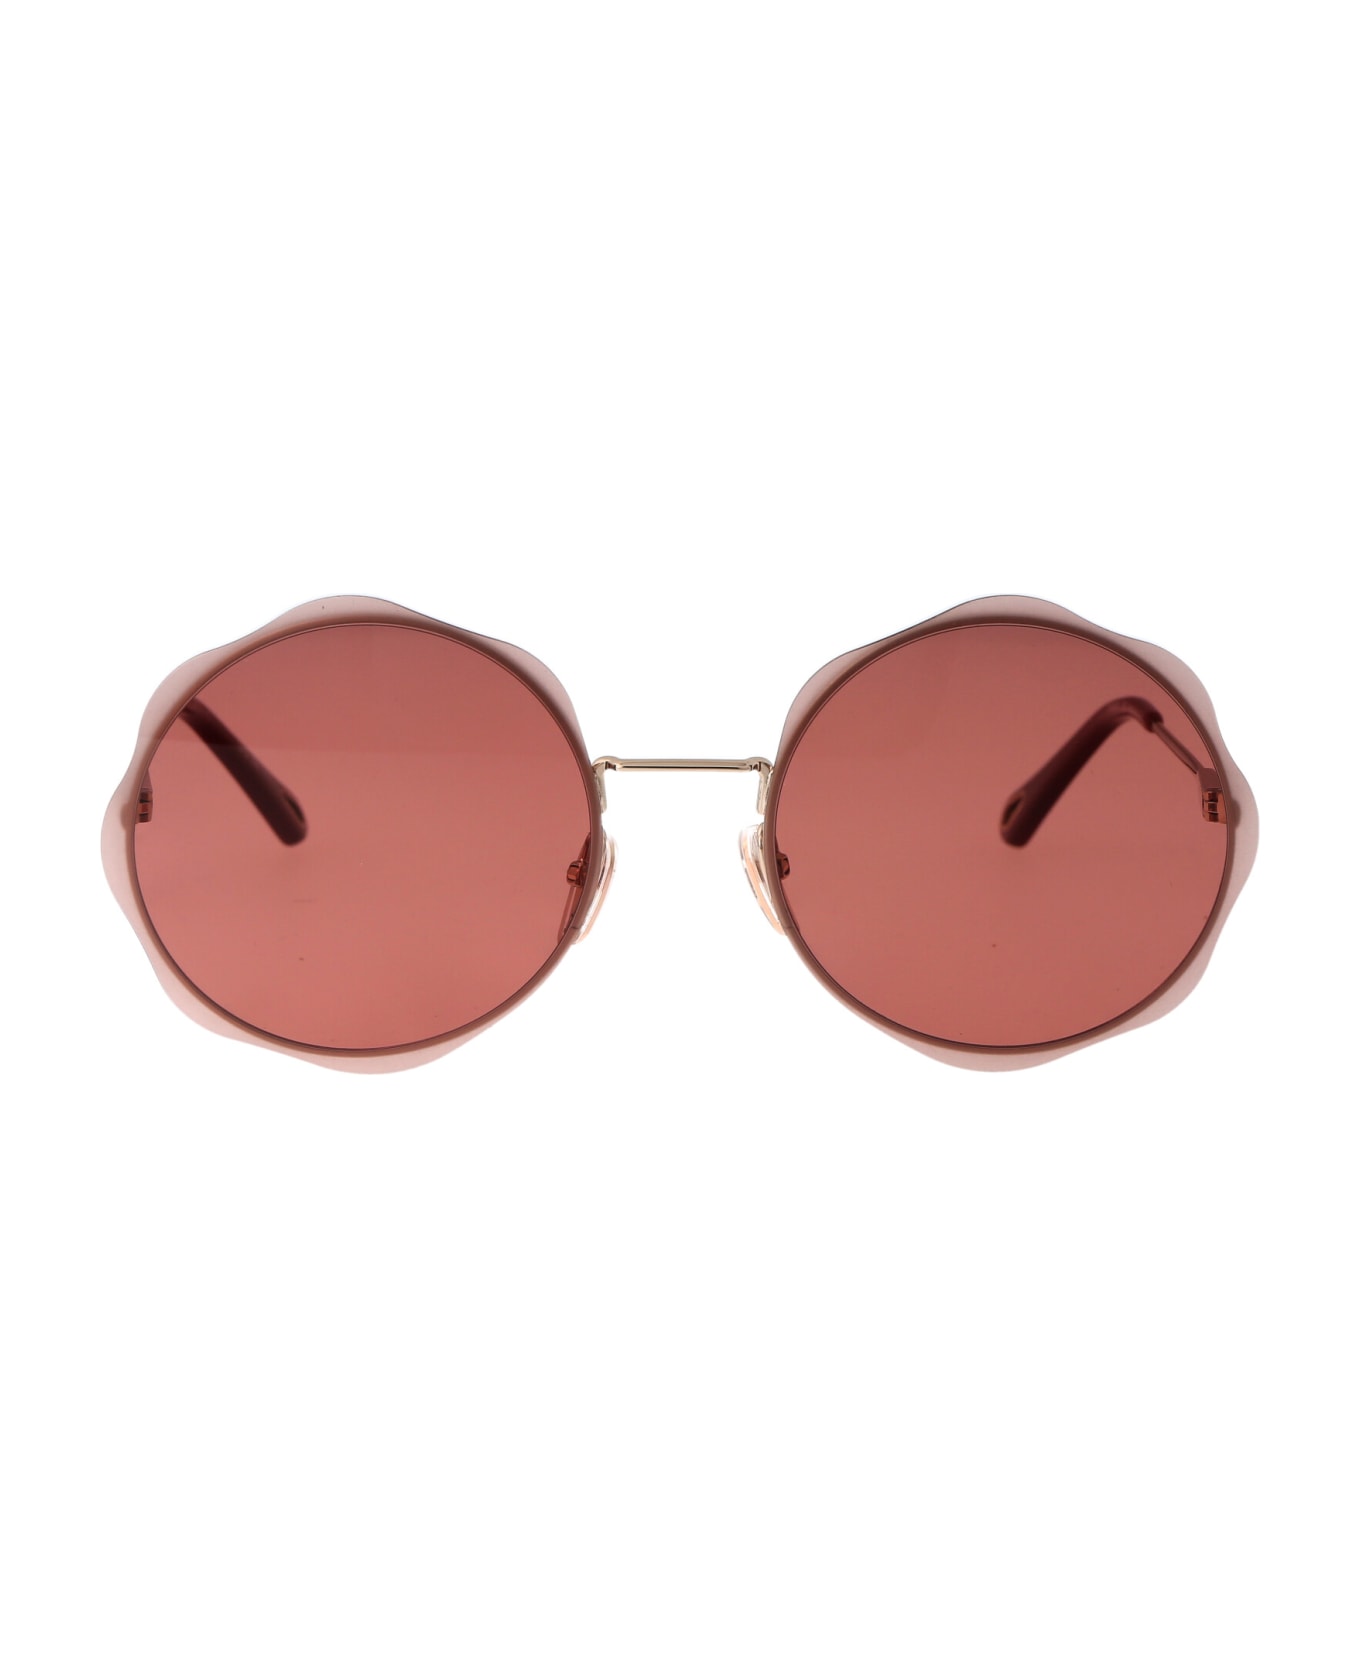 Chloé Eyewear Ch0202s Sunglasses - 003 GOLD GOLD RED サングラス